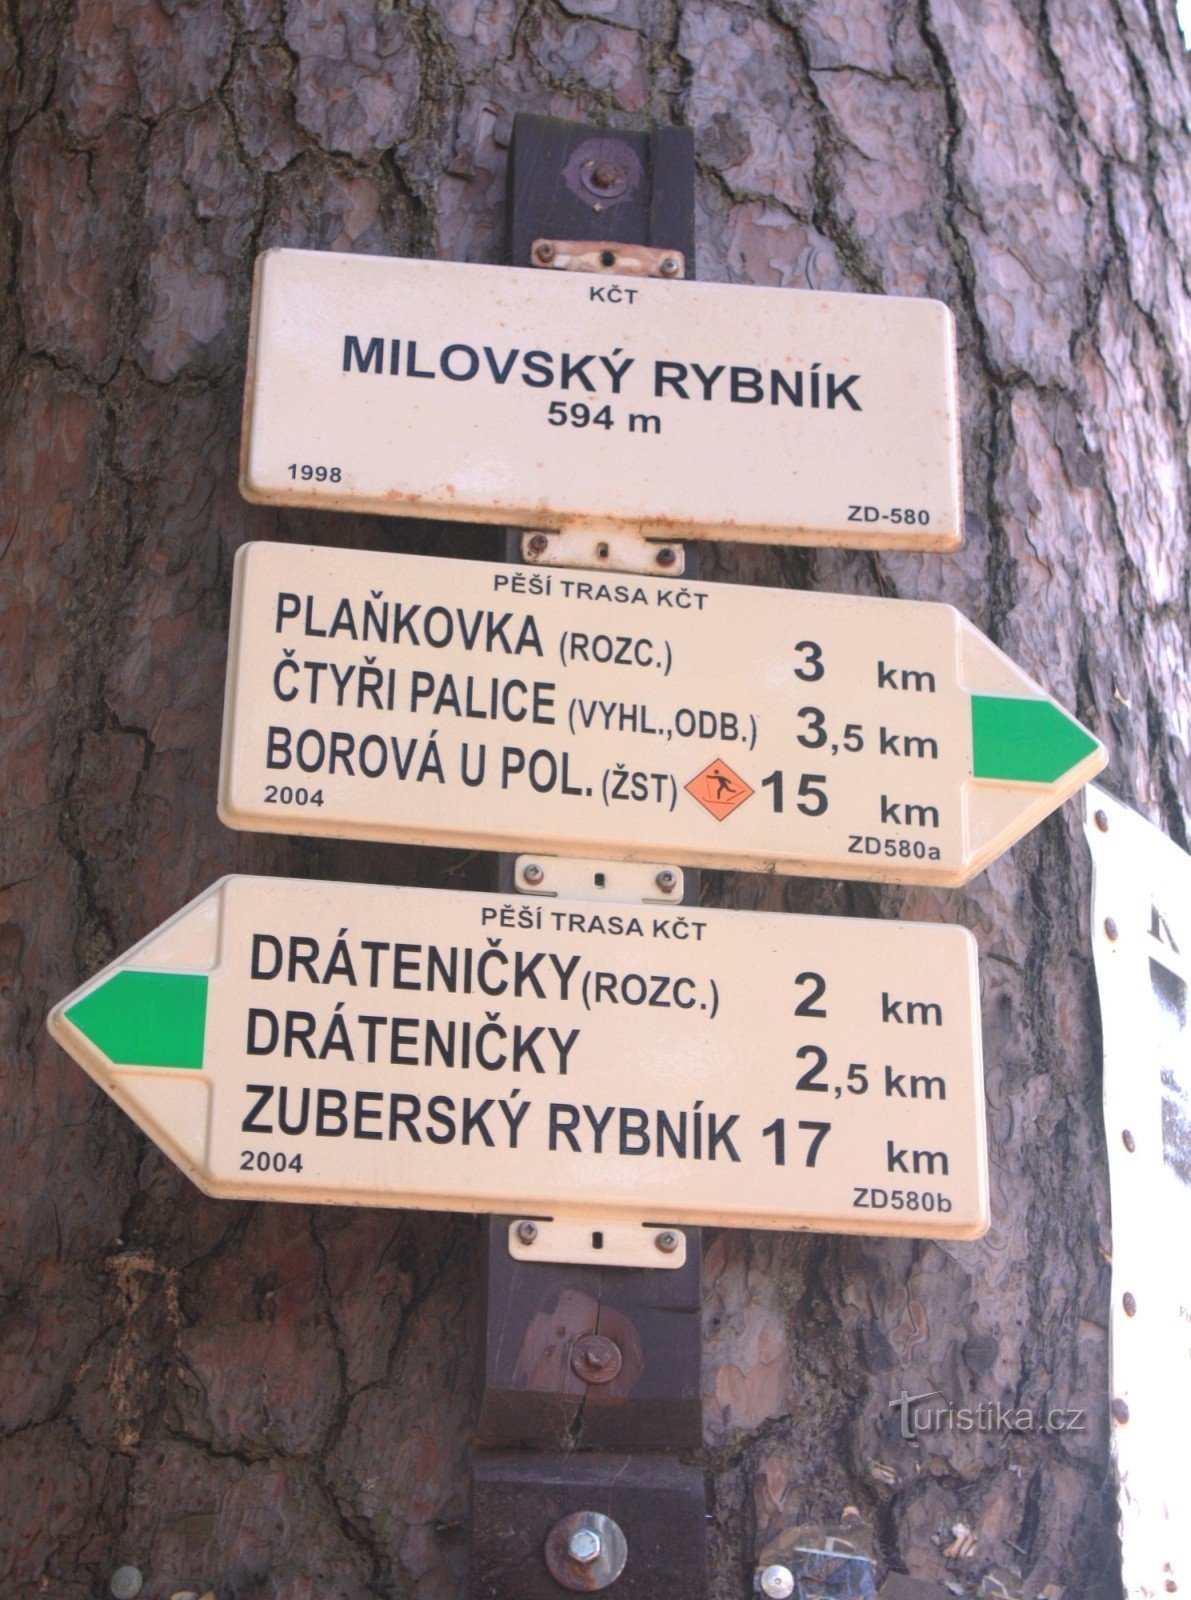 Milovského rybník 的指示牌